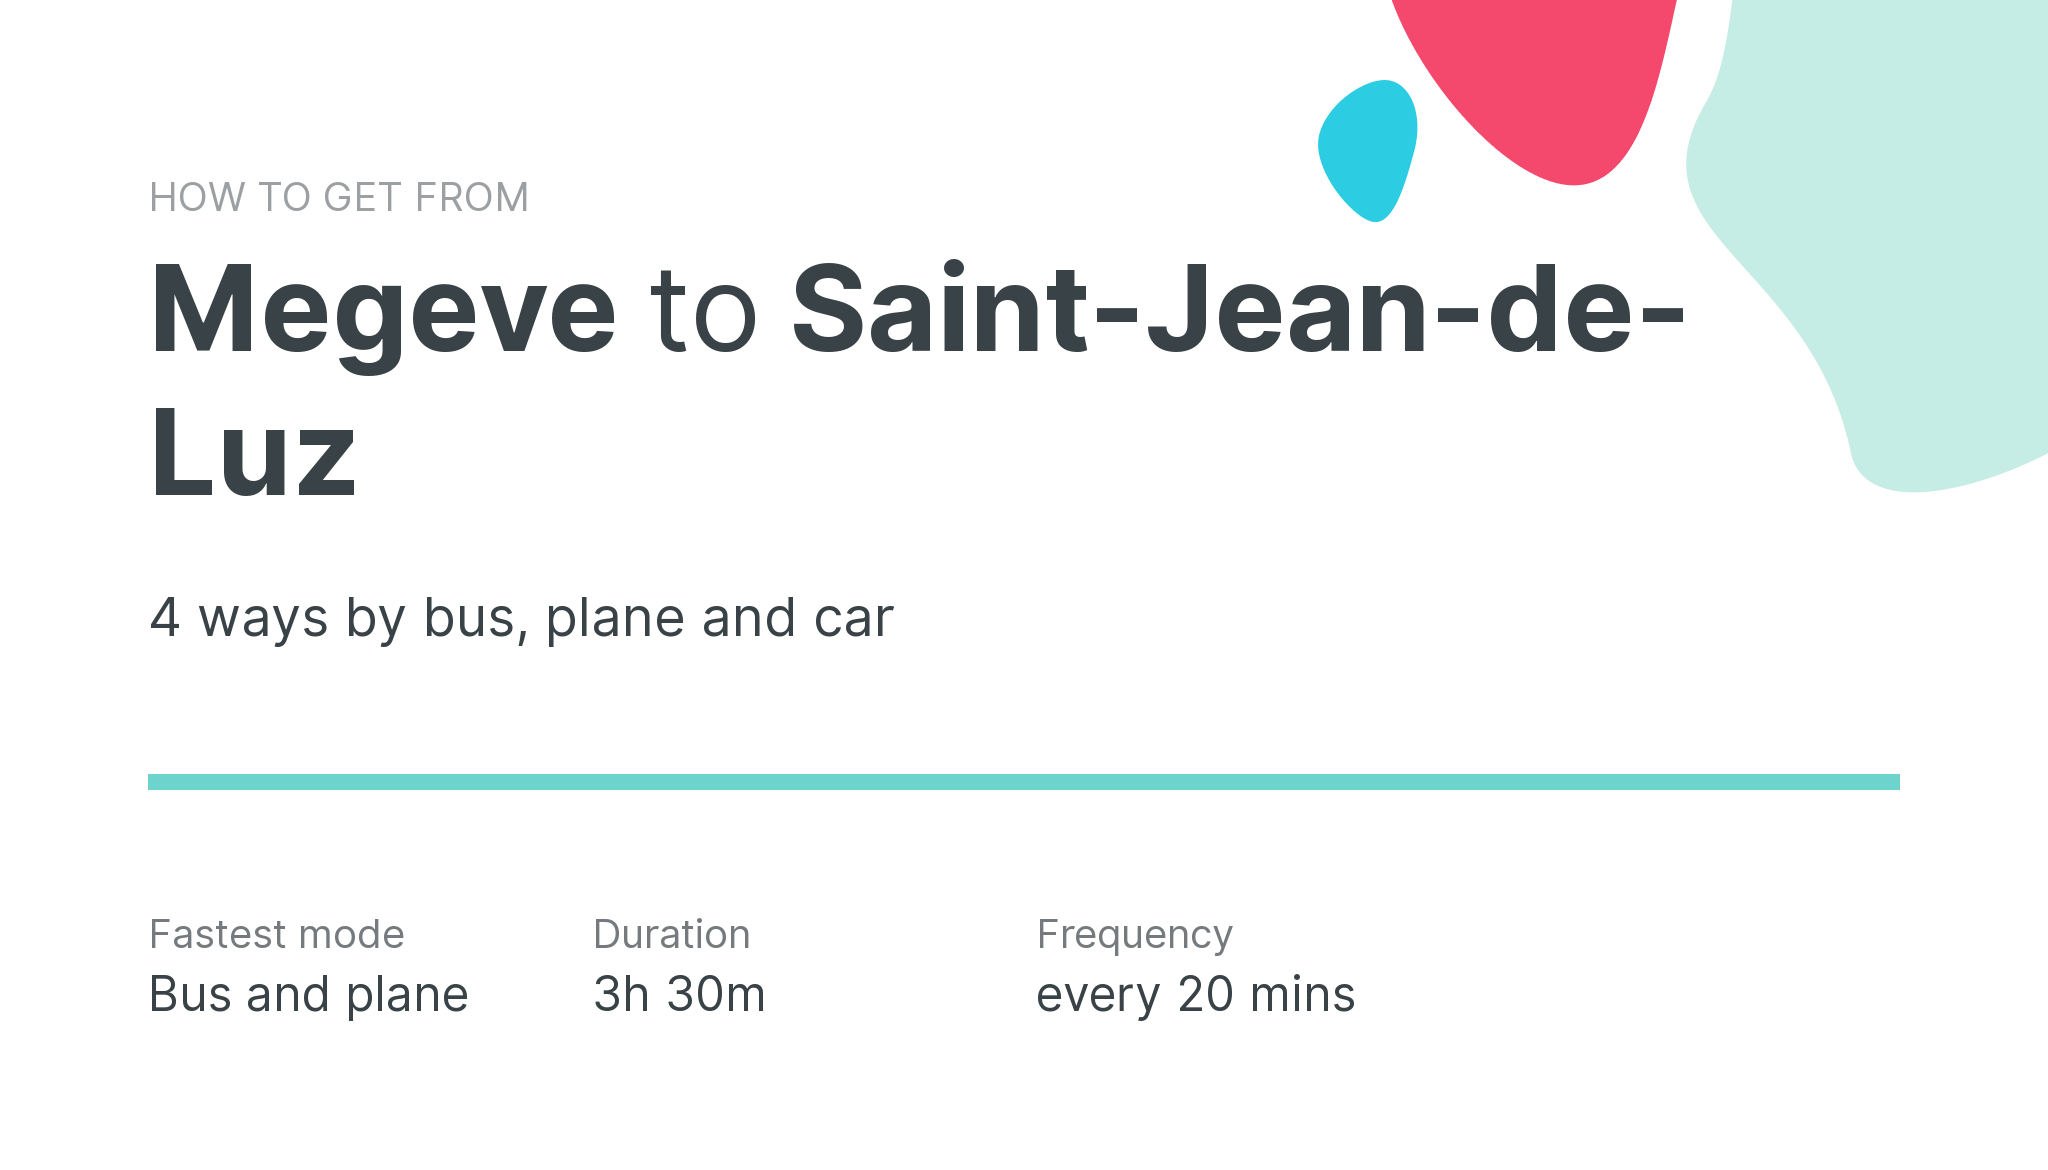 How do I get from Megeve to Saint-Jean-de-Luz